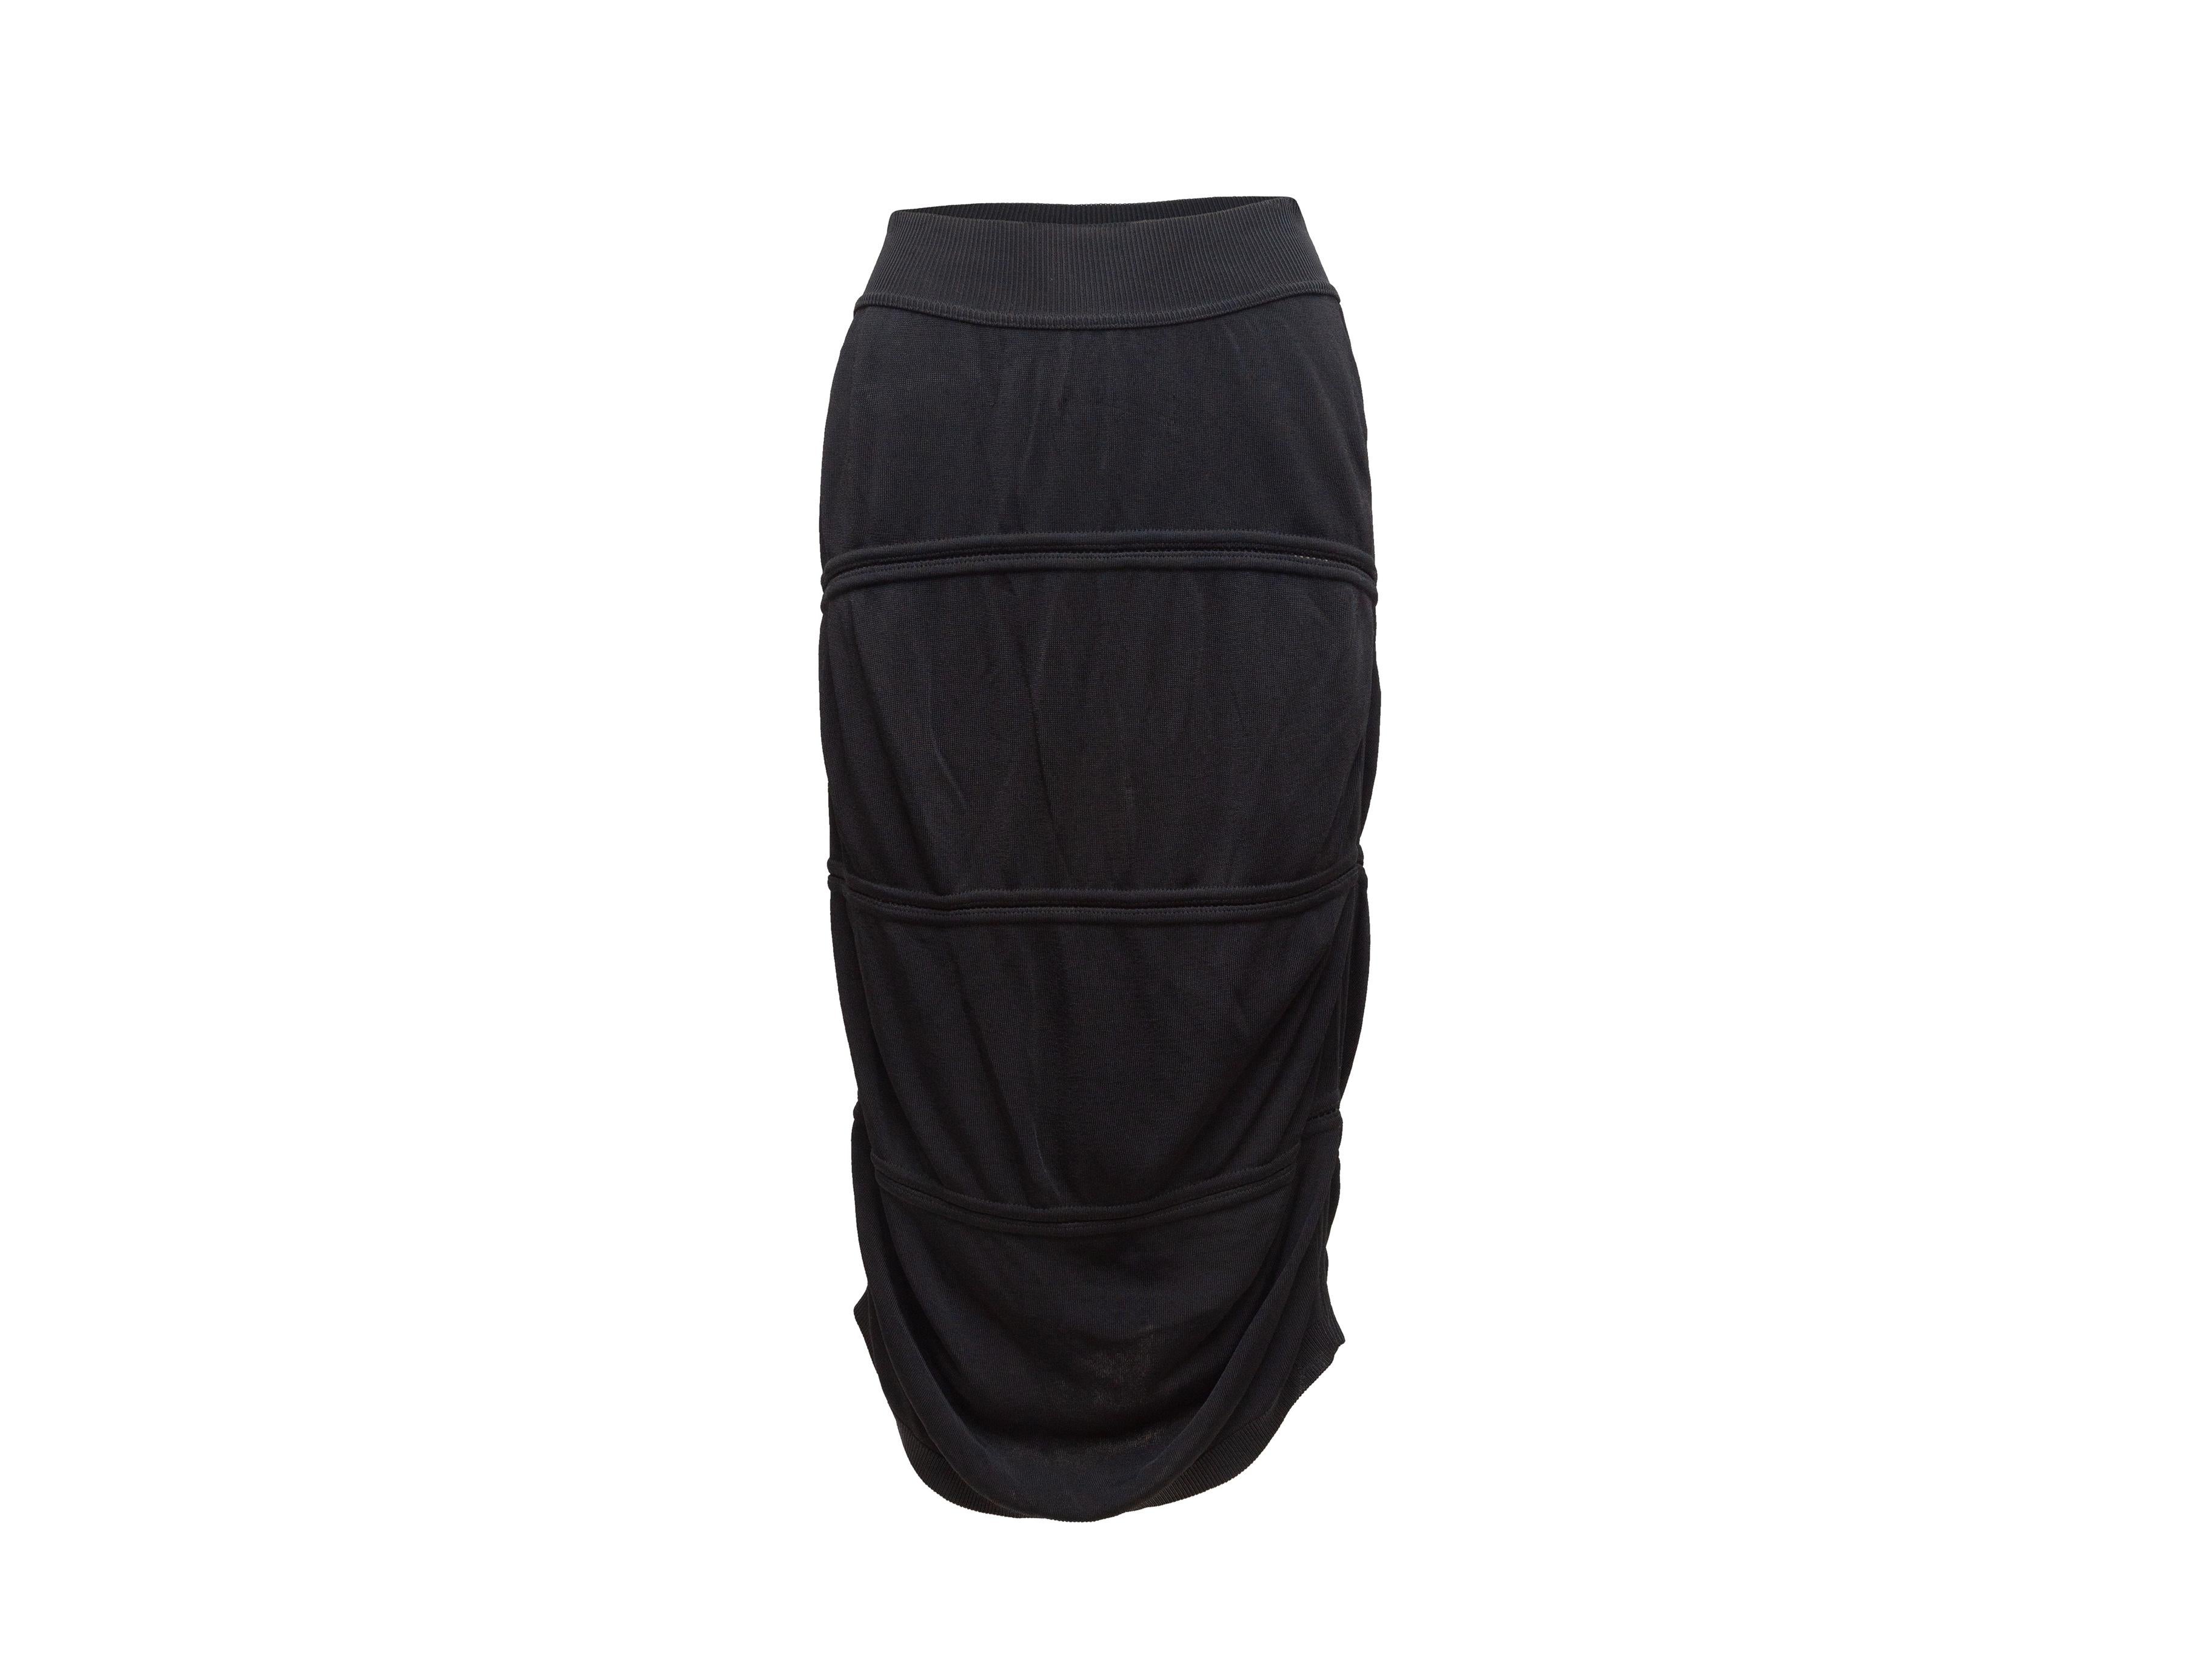 Product details: Vintage black midi skirt by Alaia. 27